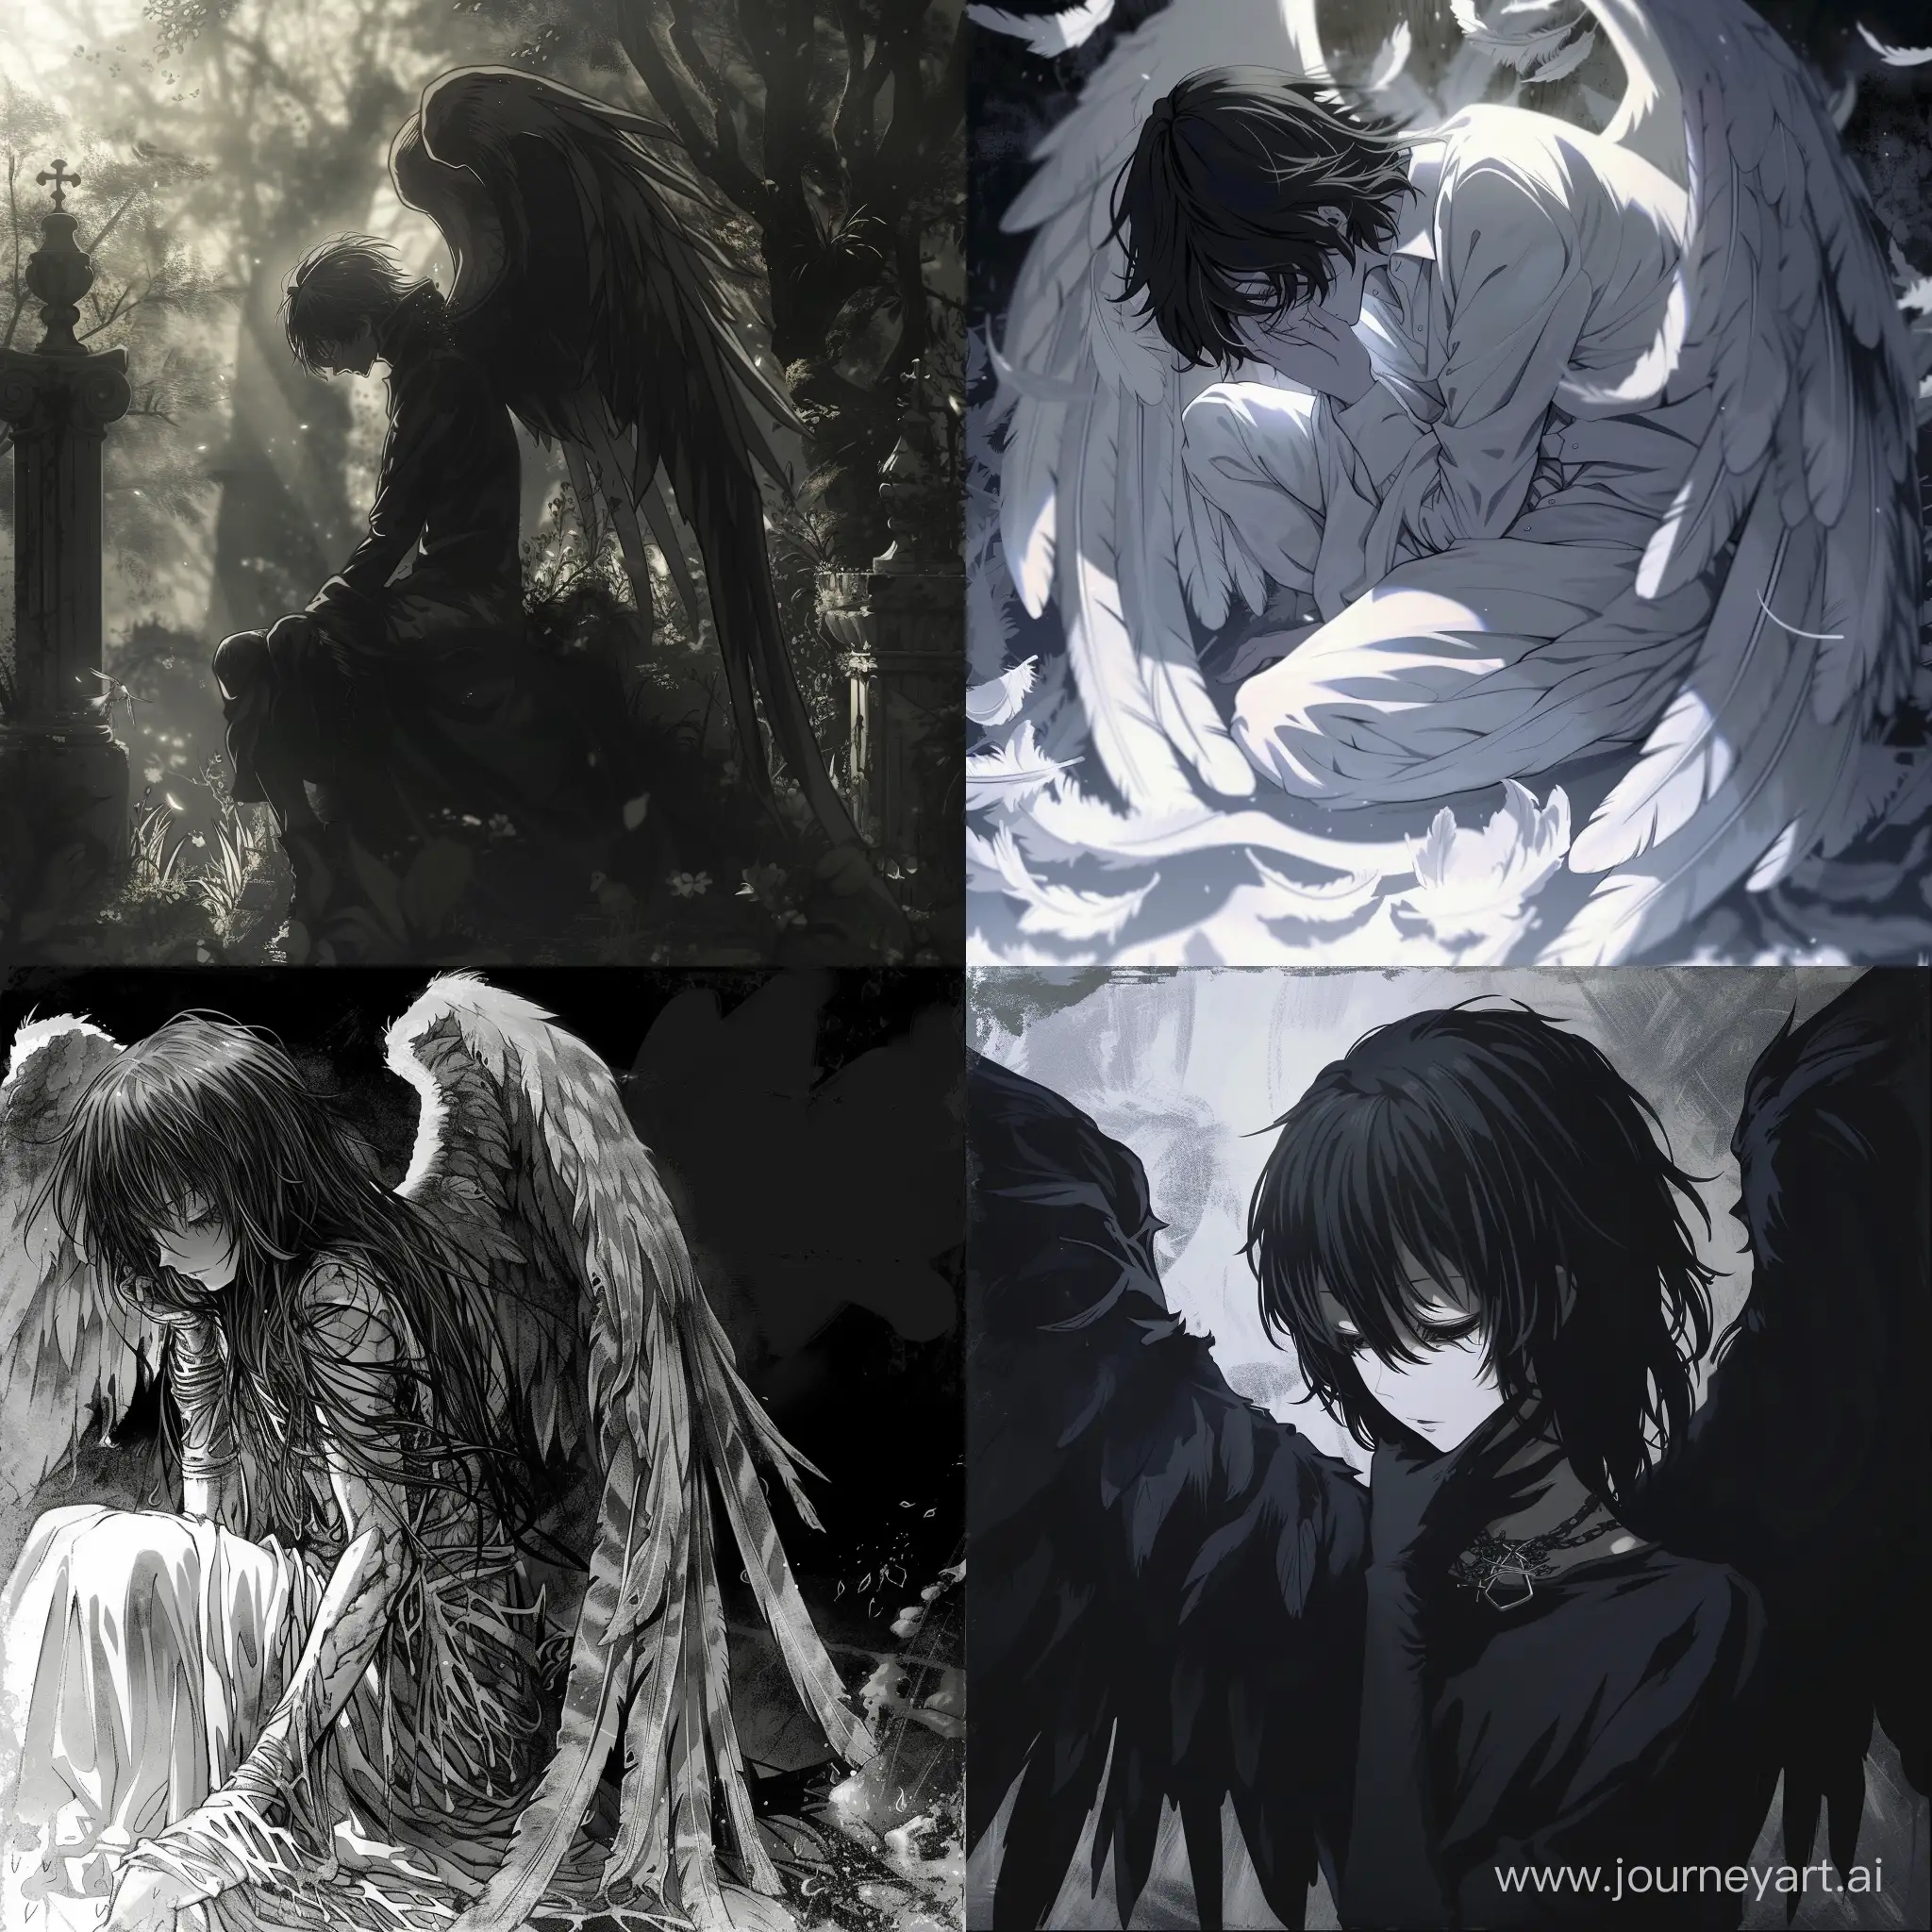 AnimeStyle-Depiction-Tragic-Demise-of-an-Angel